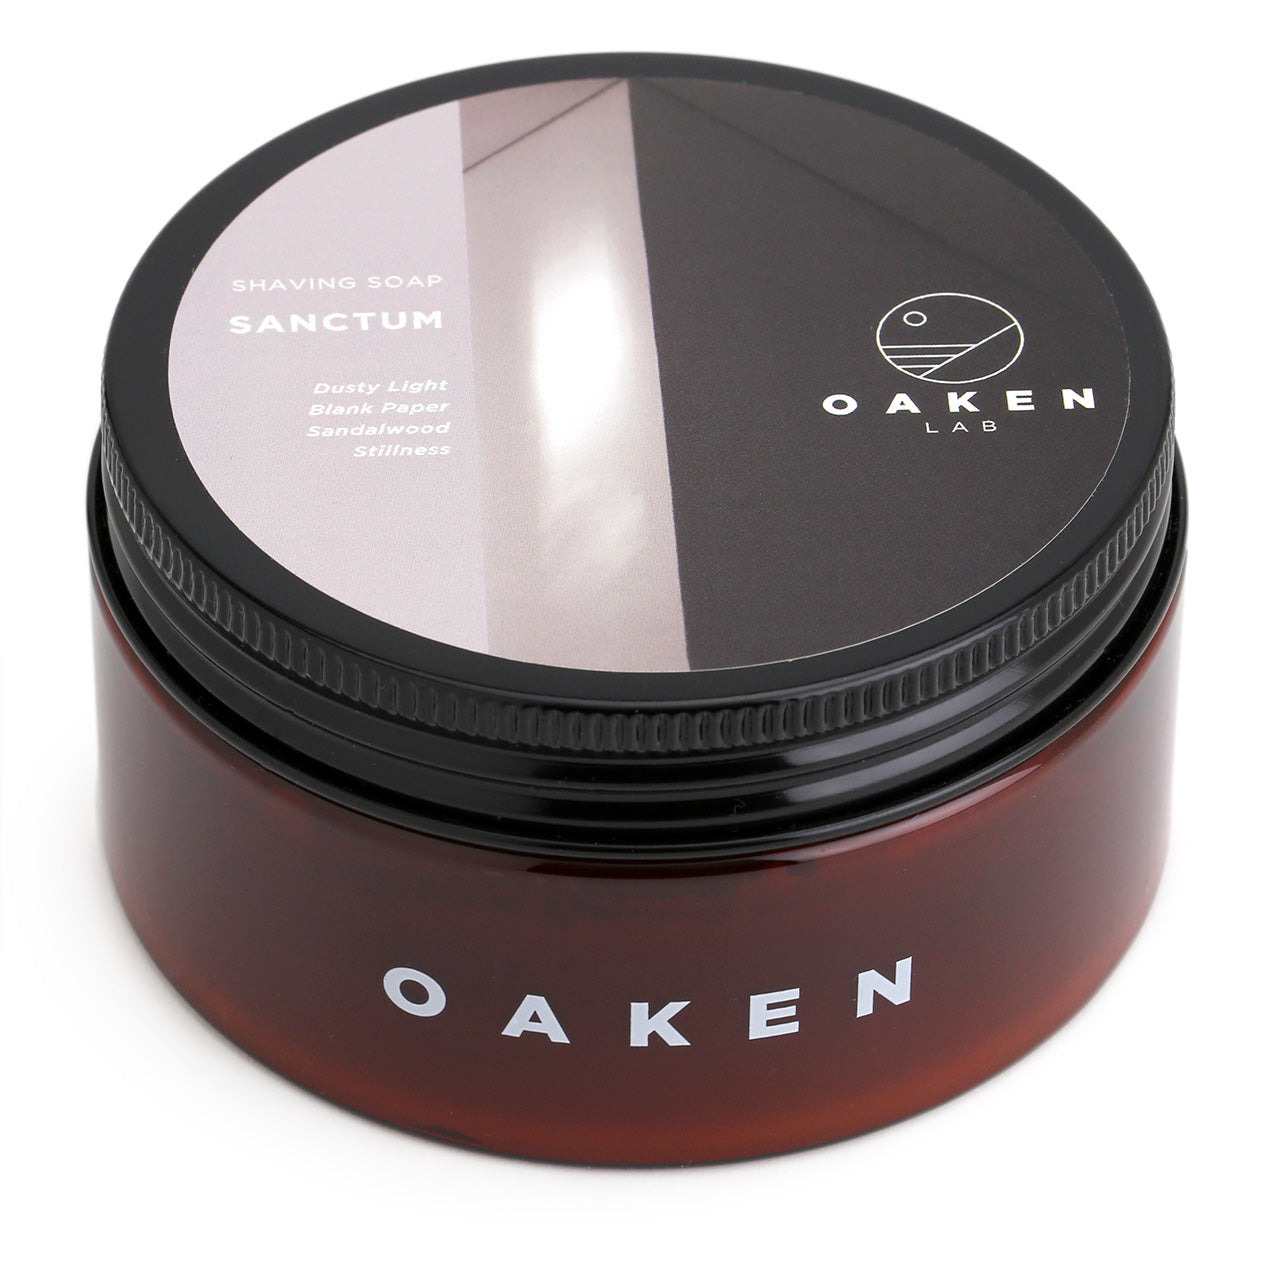 Oaken Lab artisan shaving soap - Sanctum